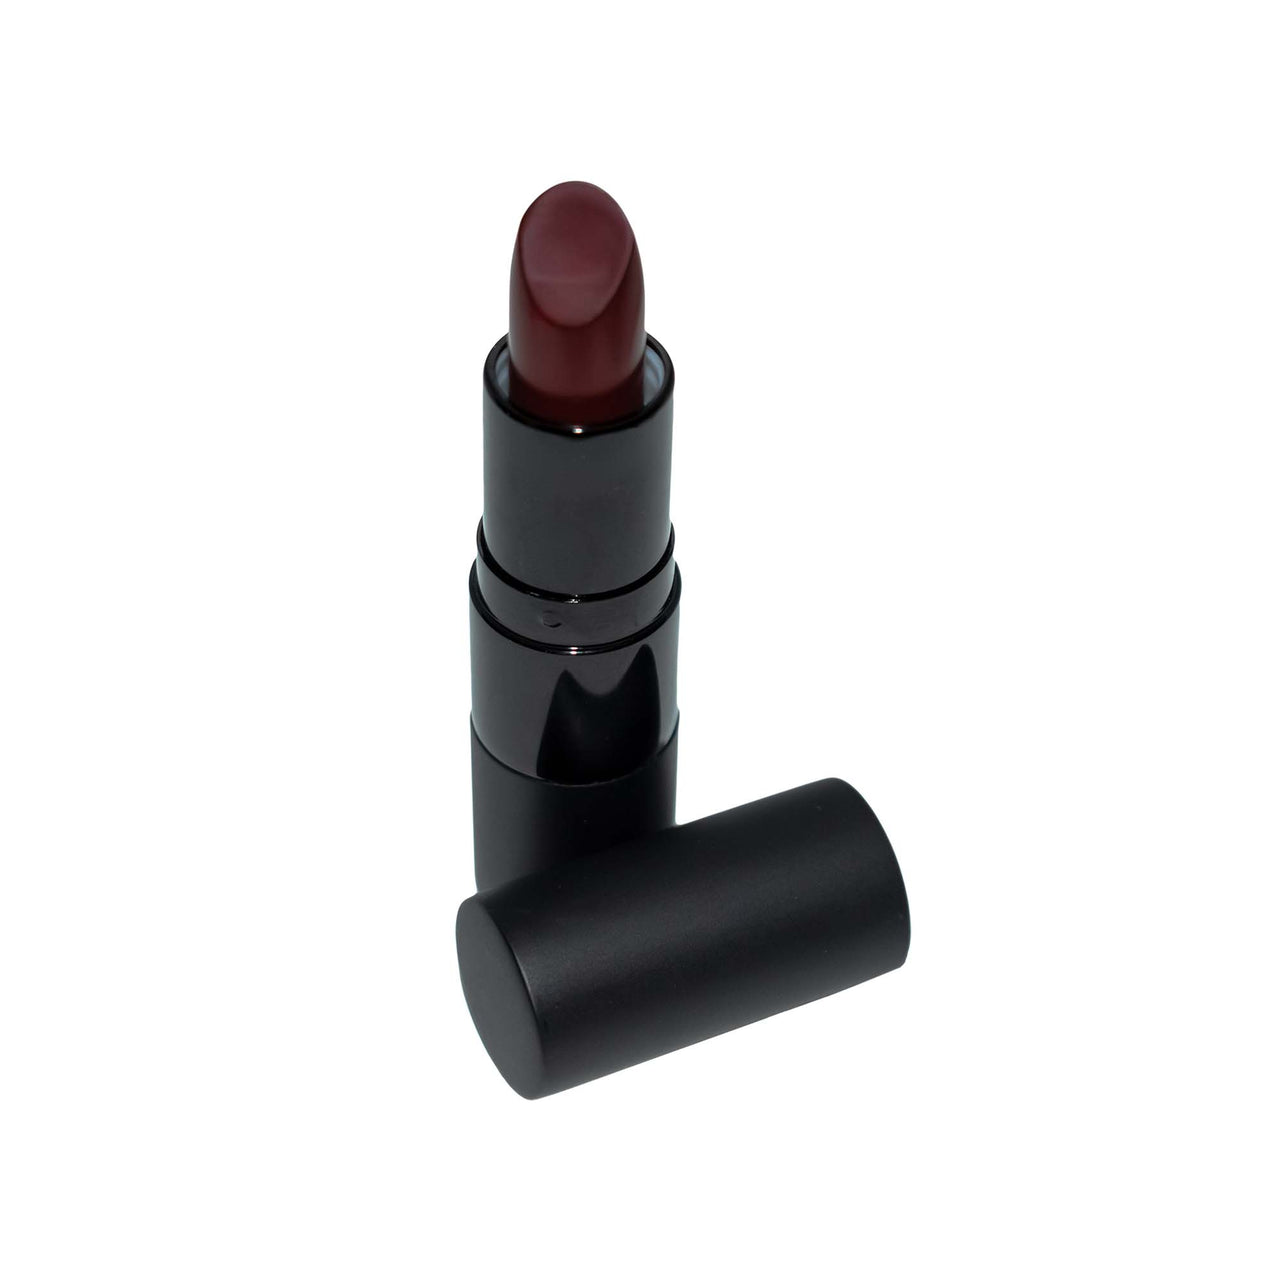 Mjae Lipstick - Deep Crush - Clean Beauty